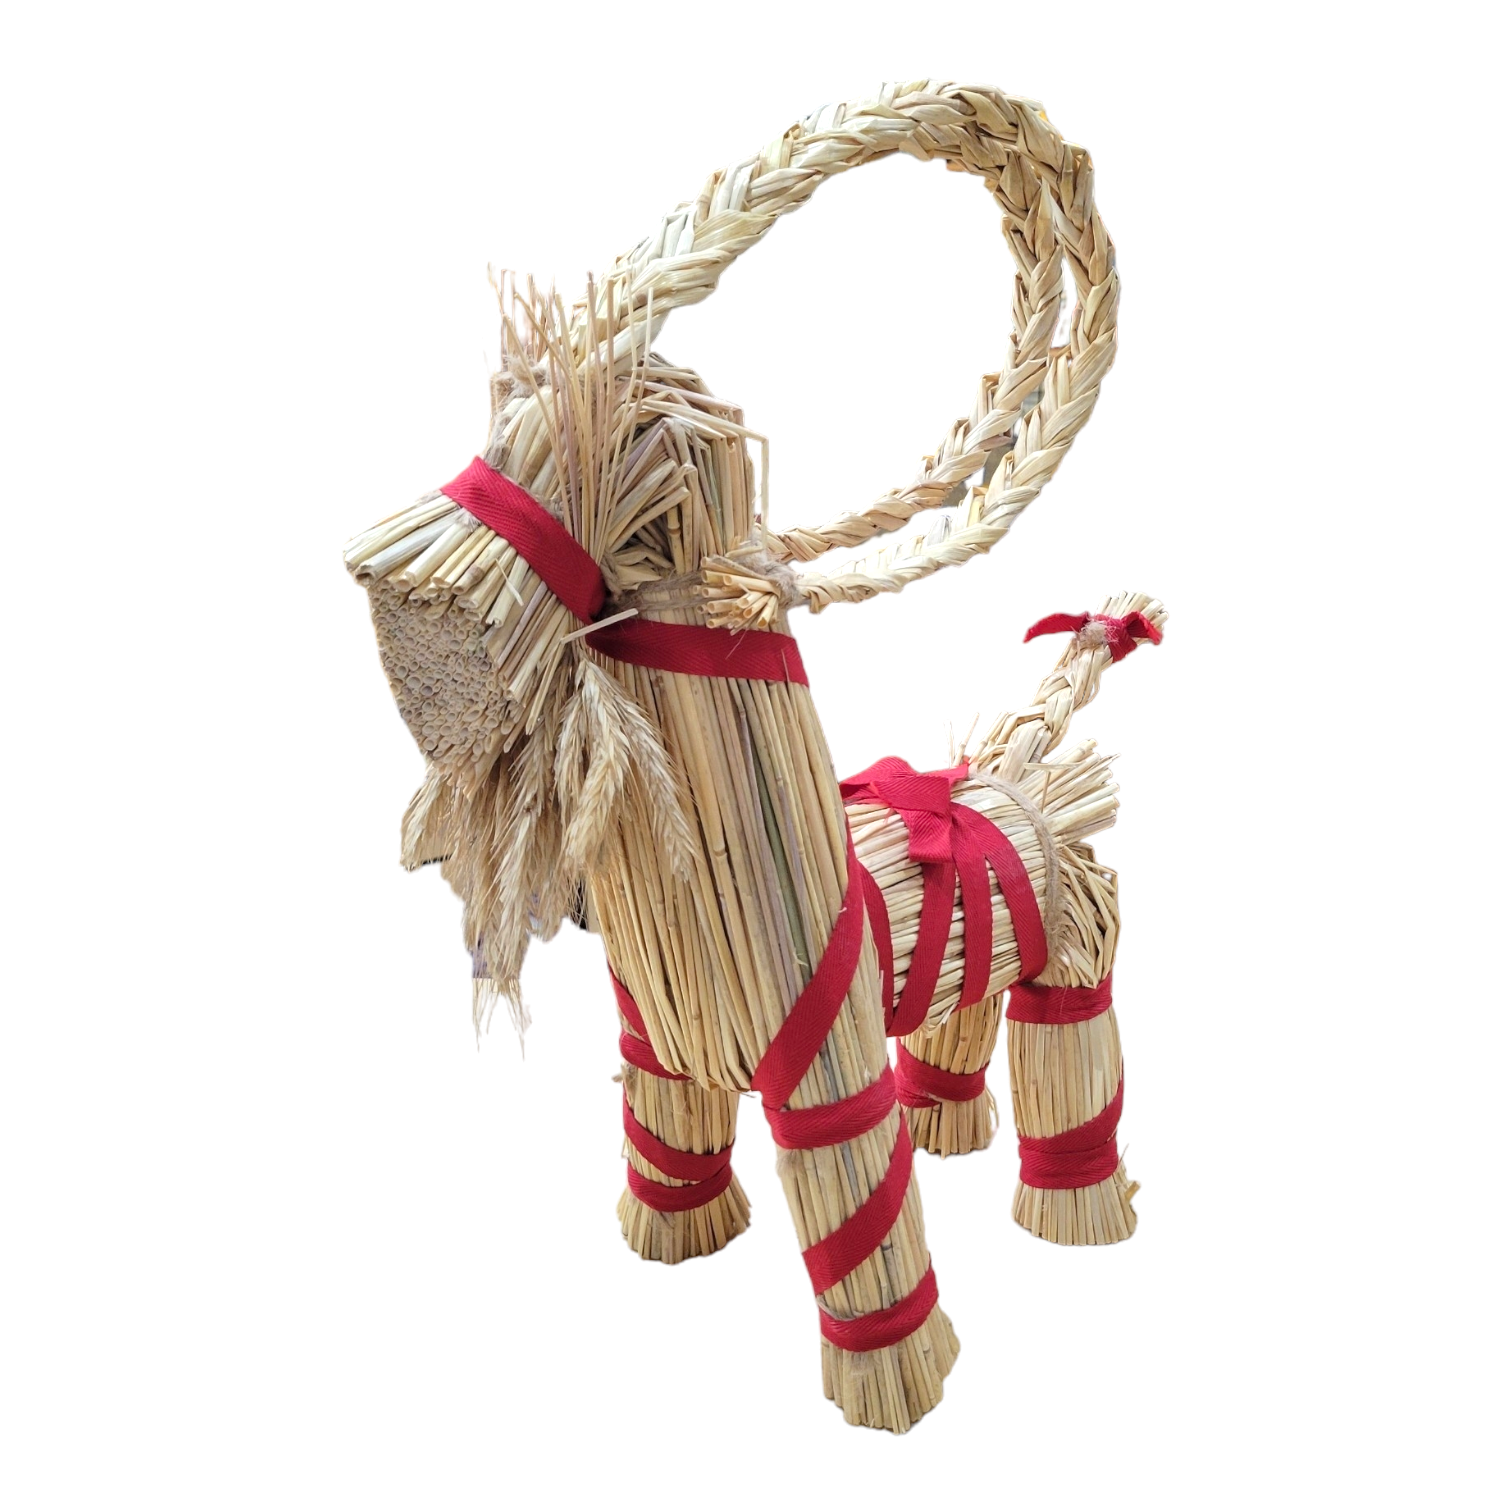 Decoration: Straw Goat Julbok 17" with beard